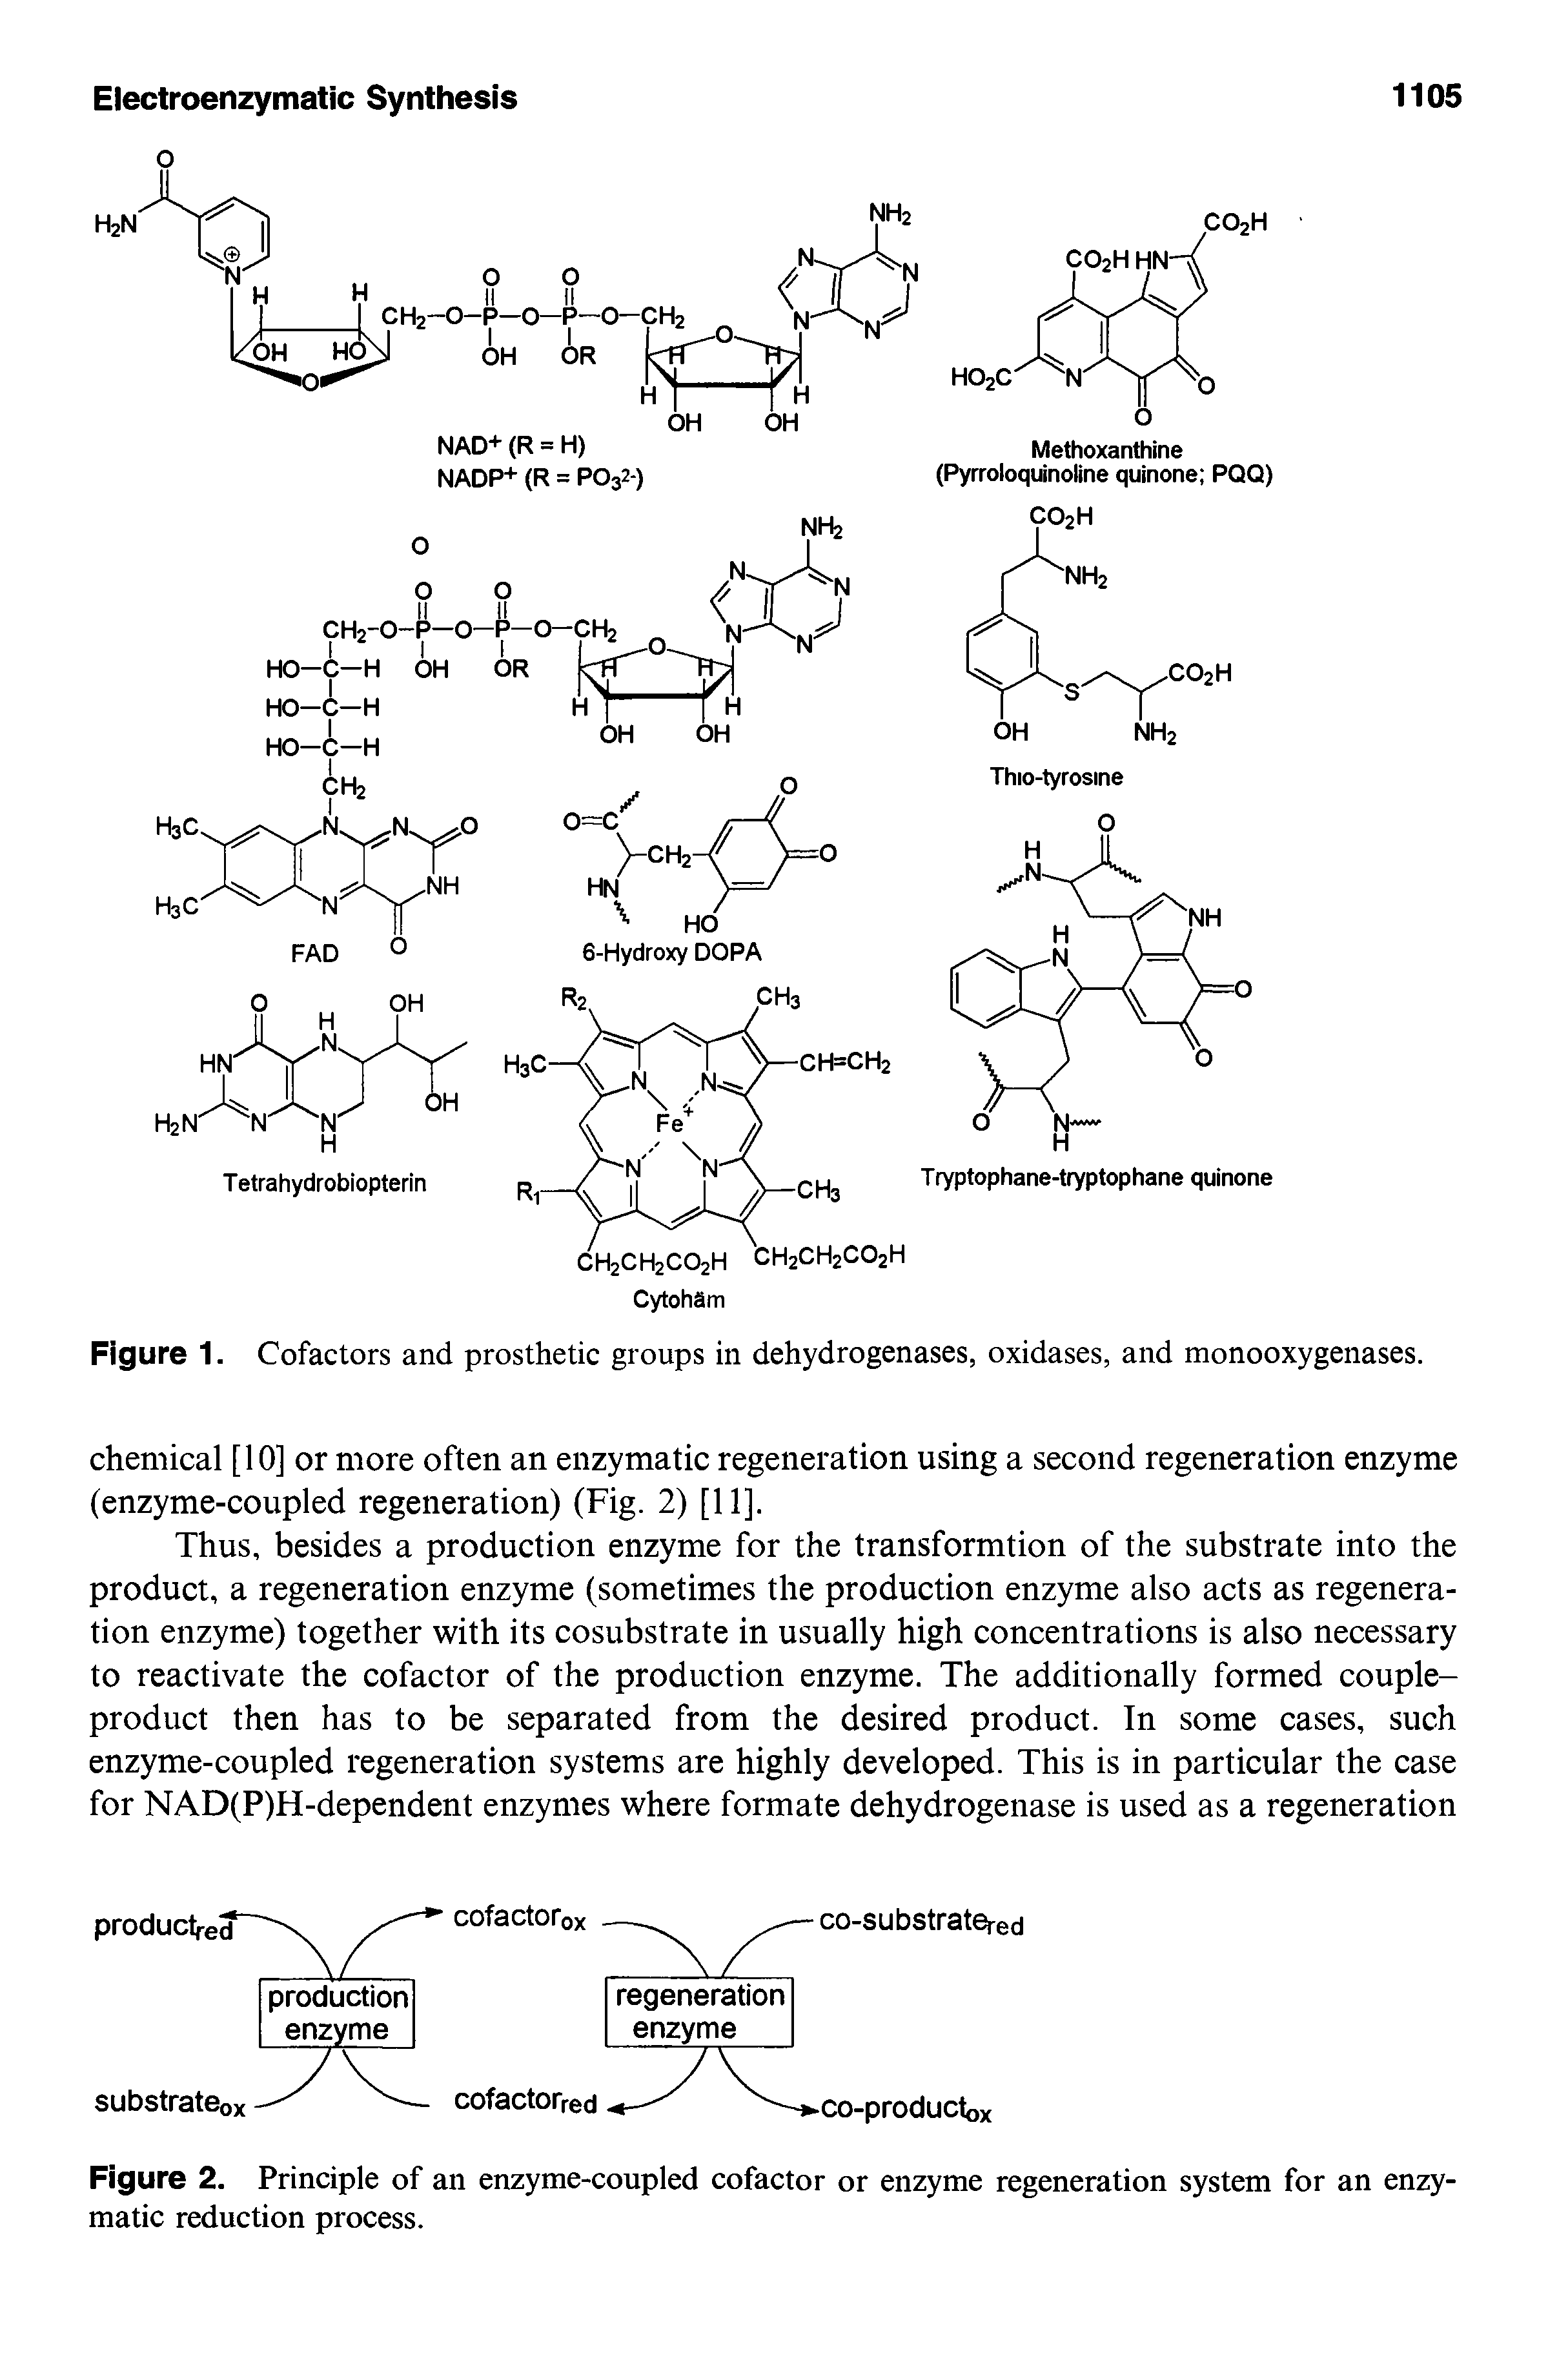 Figure 1. Cofactors and prosthetic groups in dehydrogenases, oxidases, and monooxygenases.